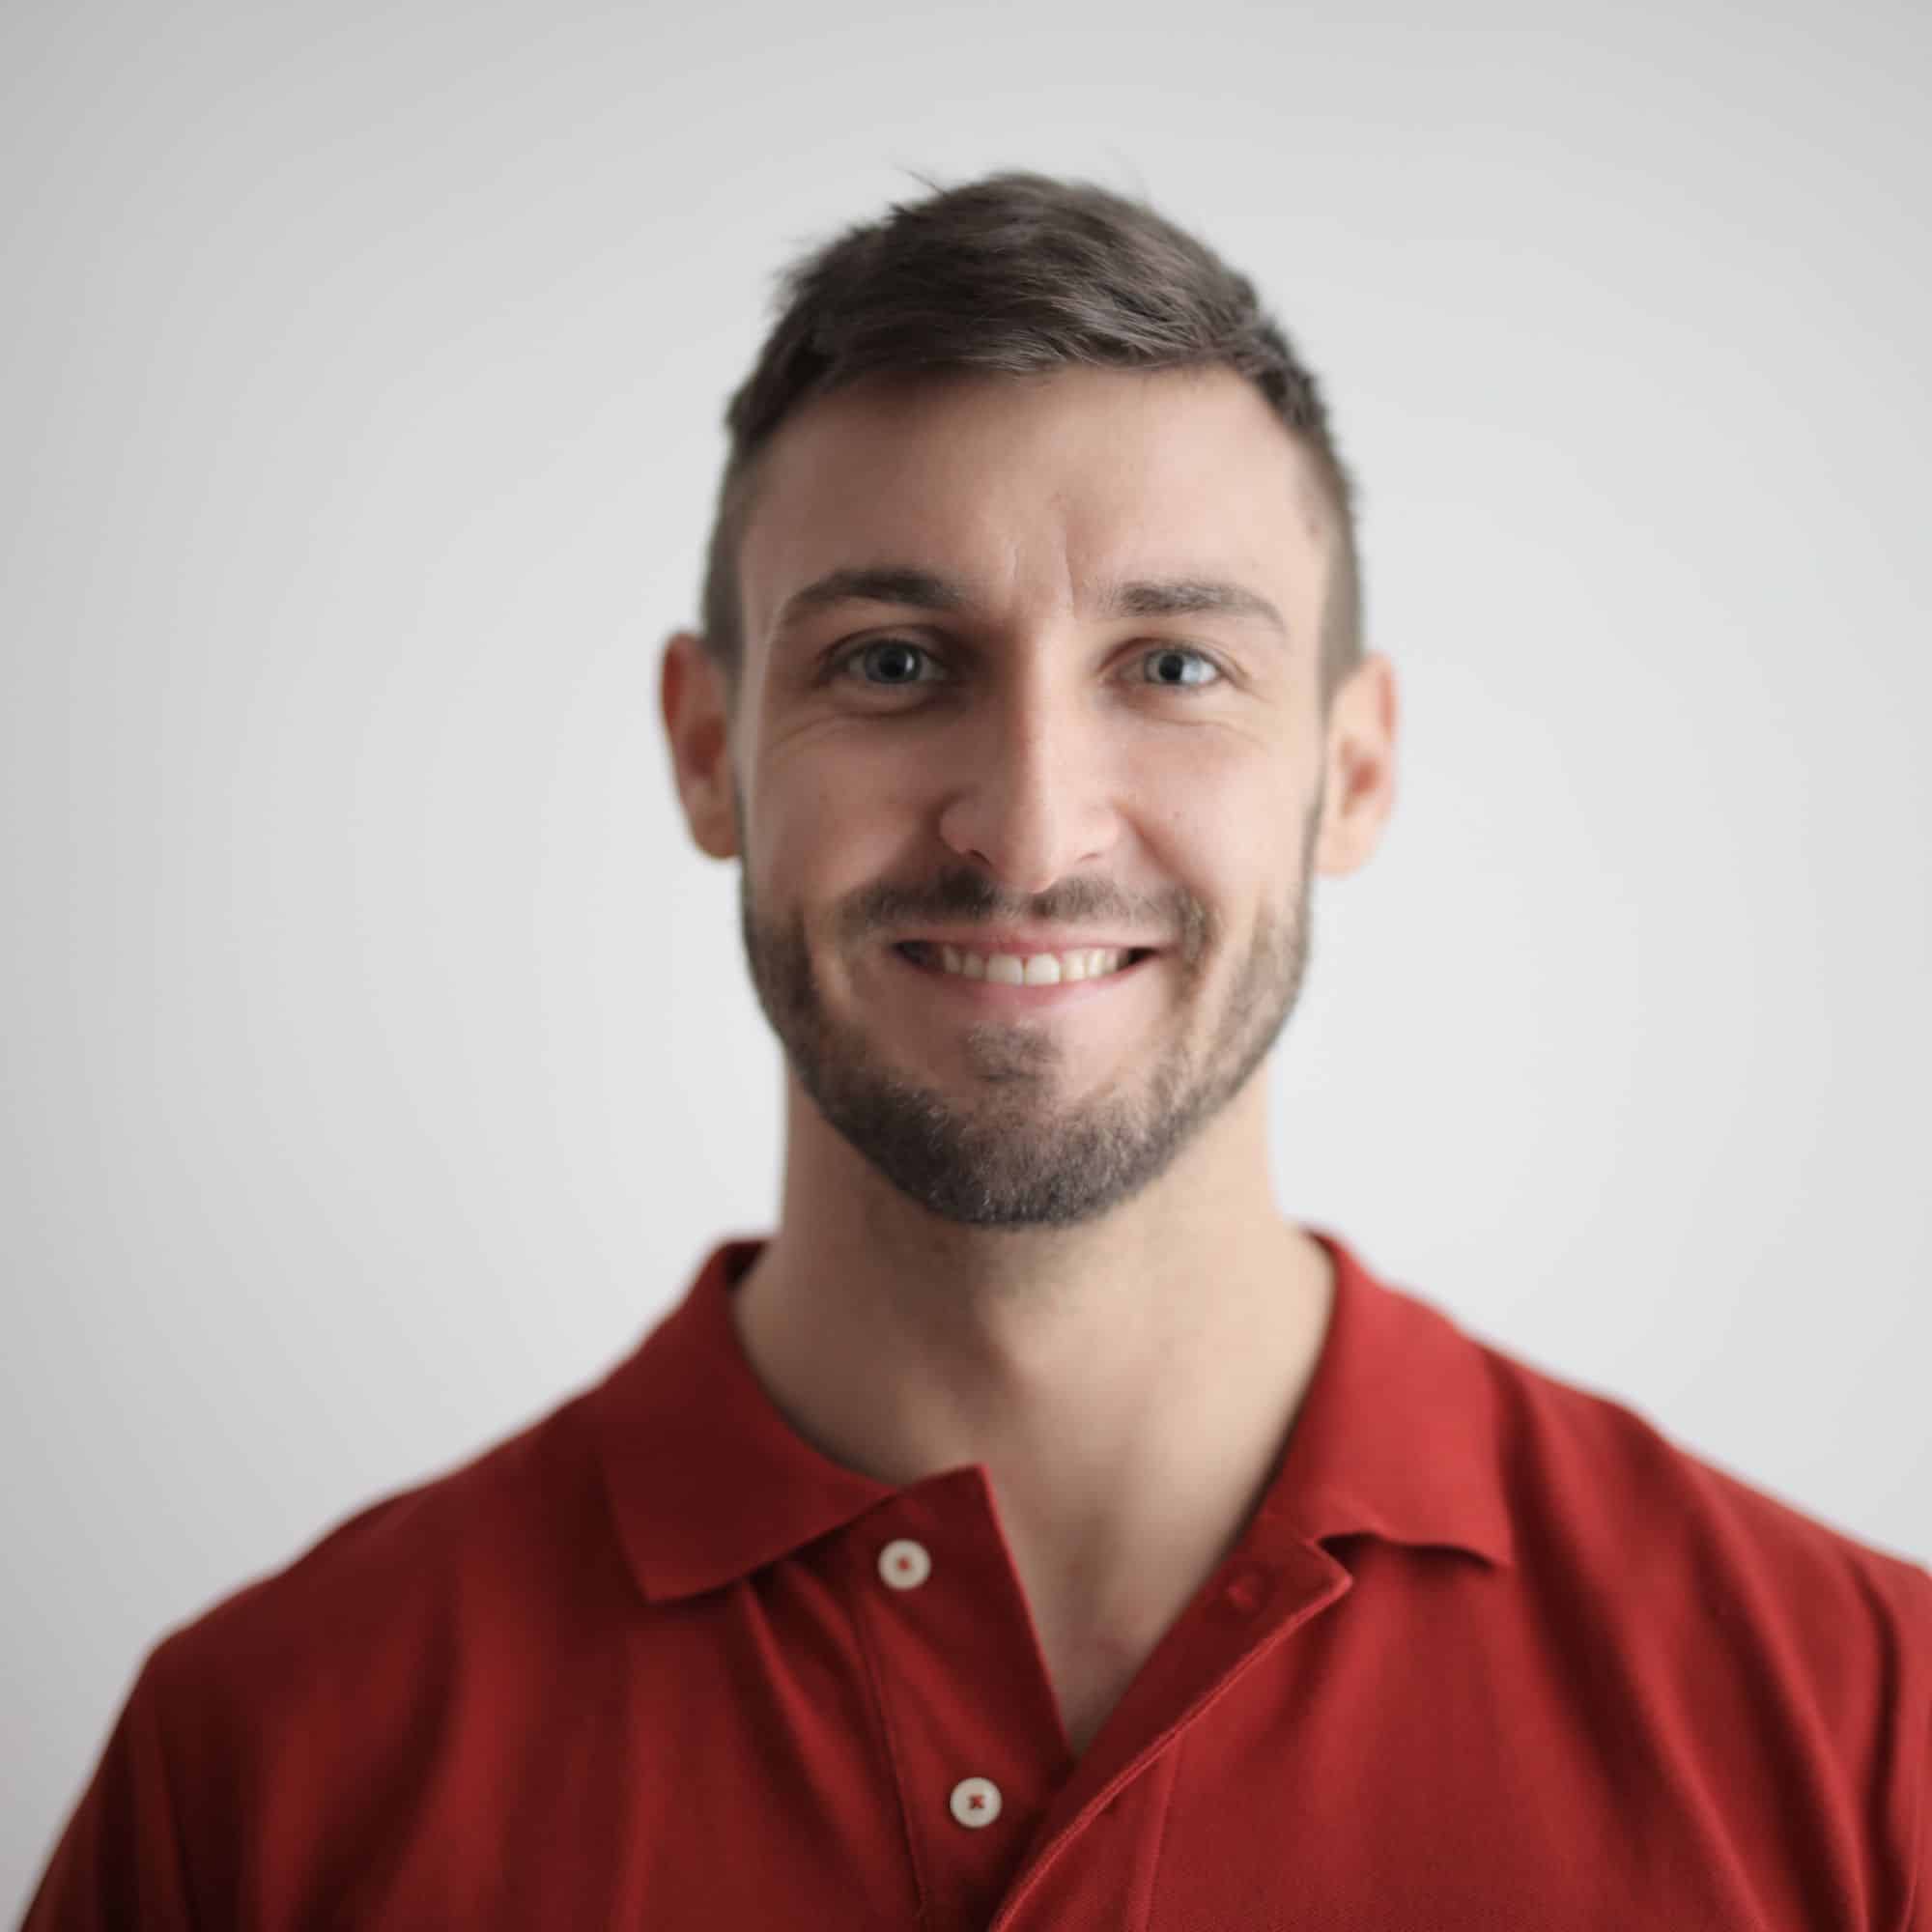 Professional headshot of man wearing red shirt working with data visualization